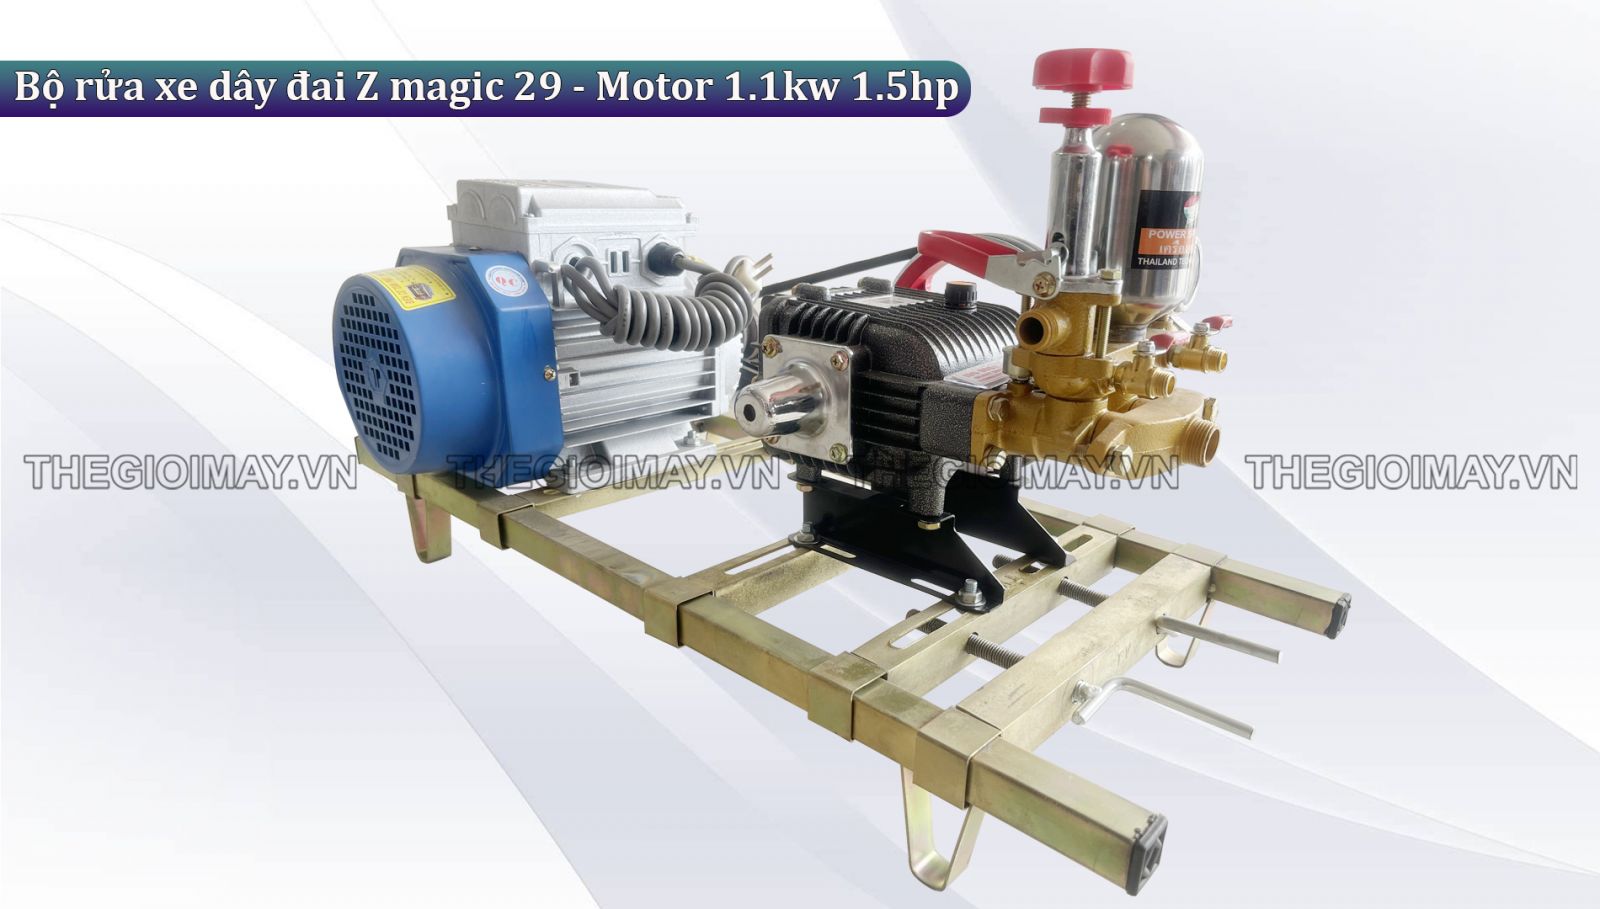 Bộ rửa xe dây đai Z magic 29 - Motor 1.1kw 1.5hp